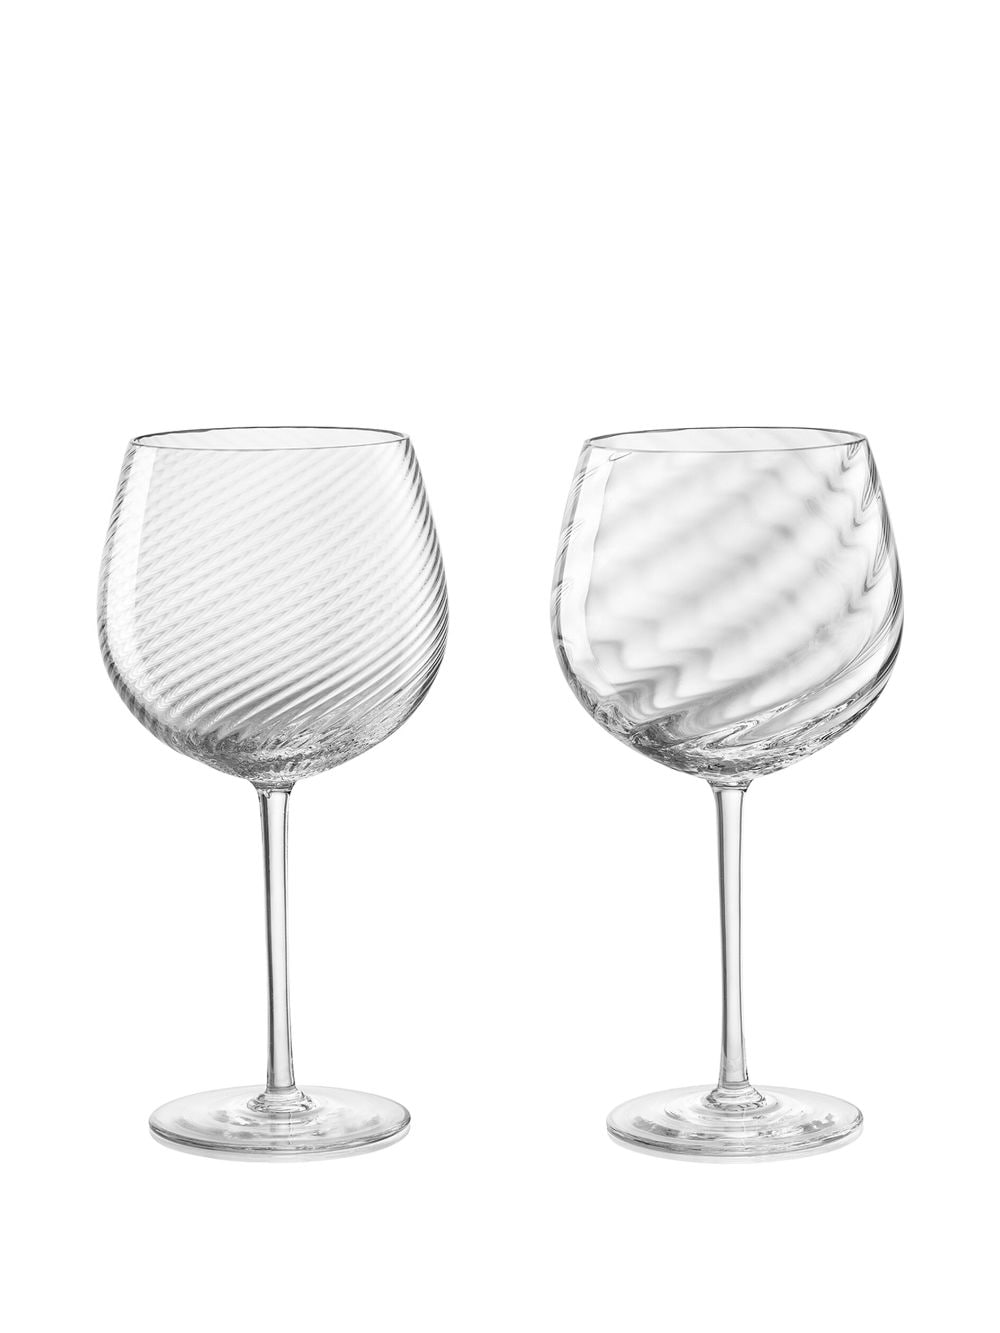 NasonMoretti Tolomeo red wine glasses (set of six) - Beige